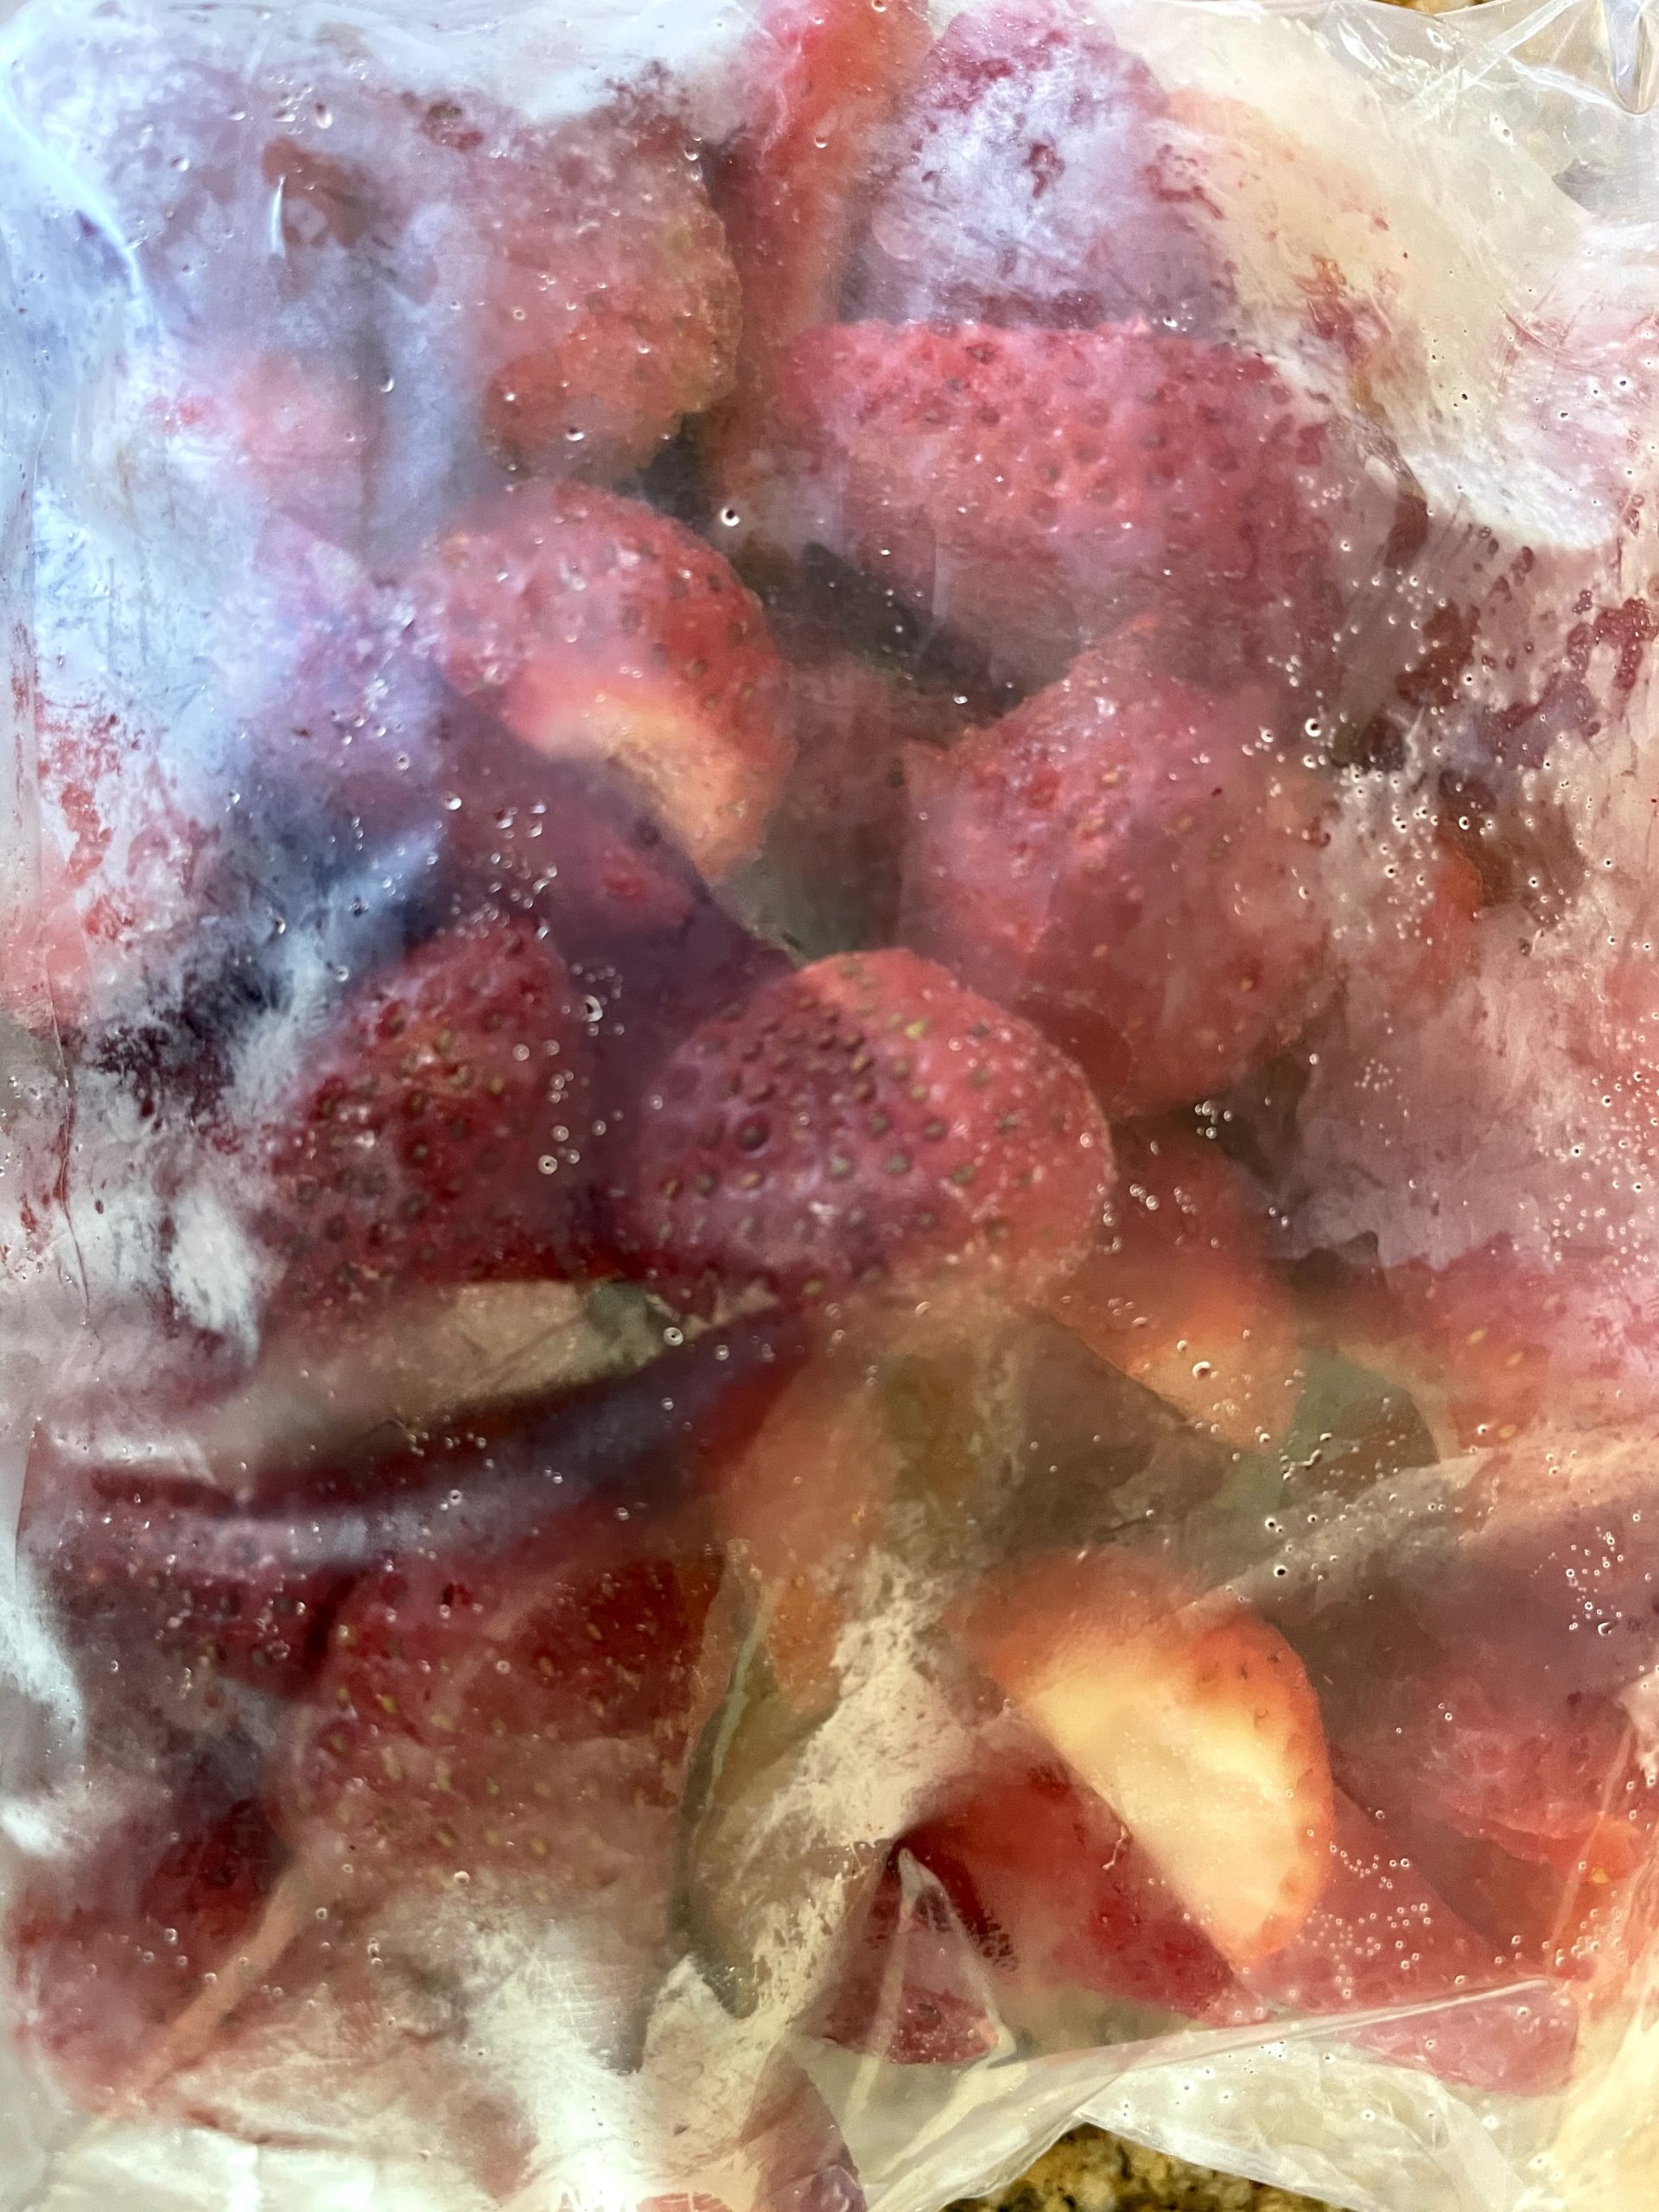 Home frozen strawberries